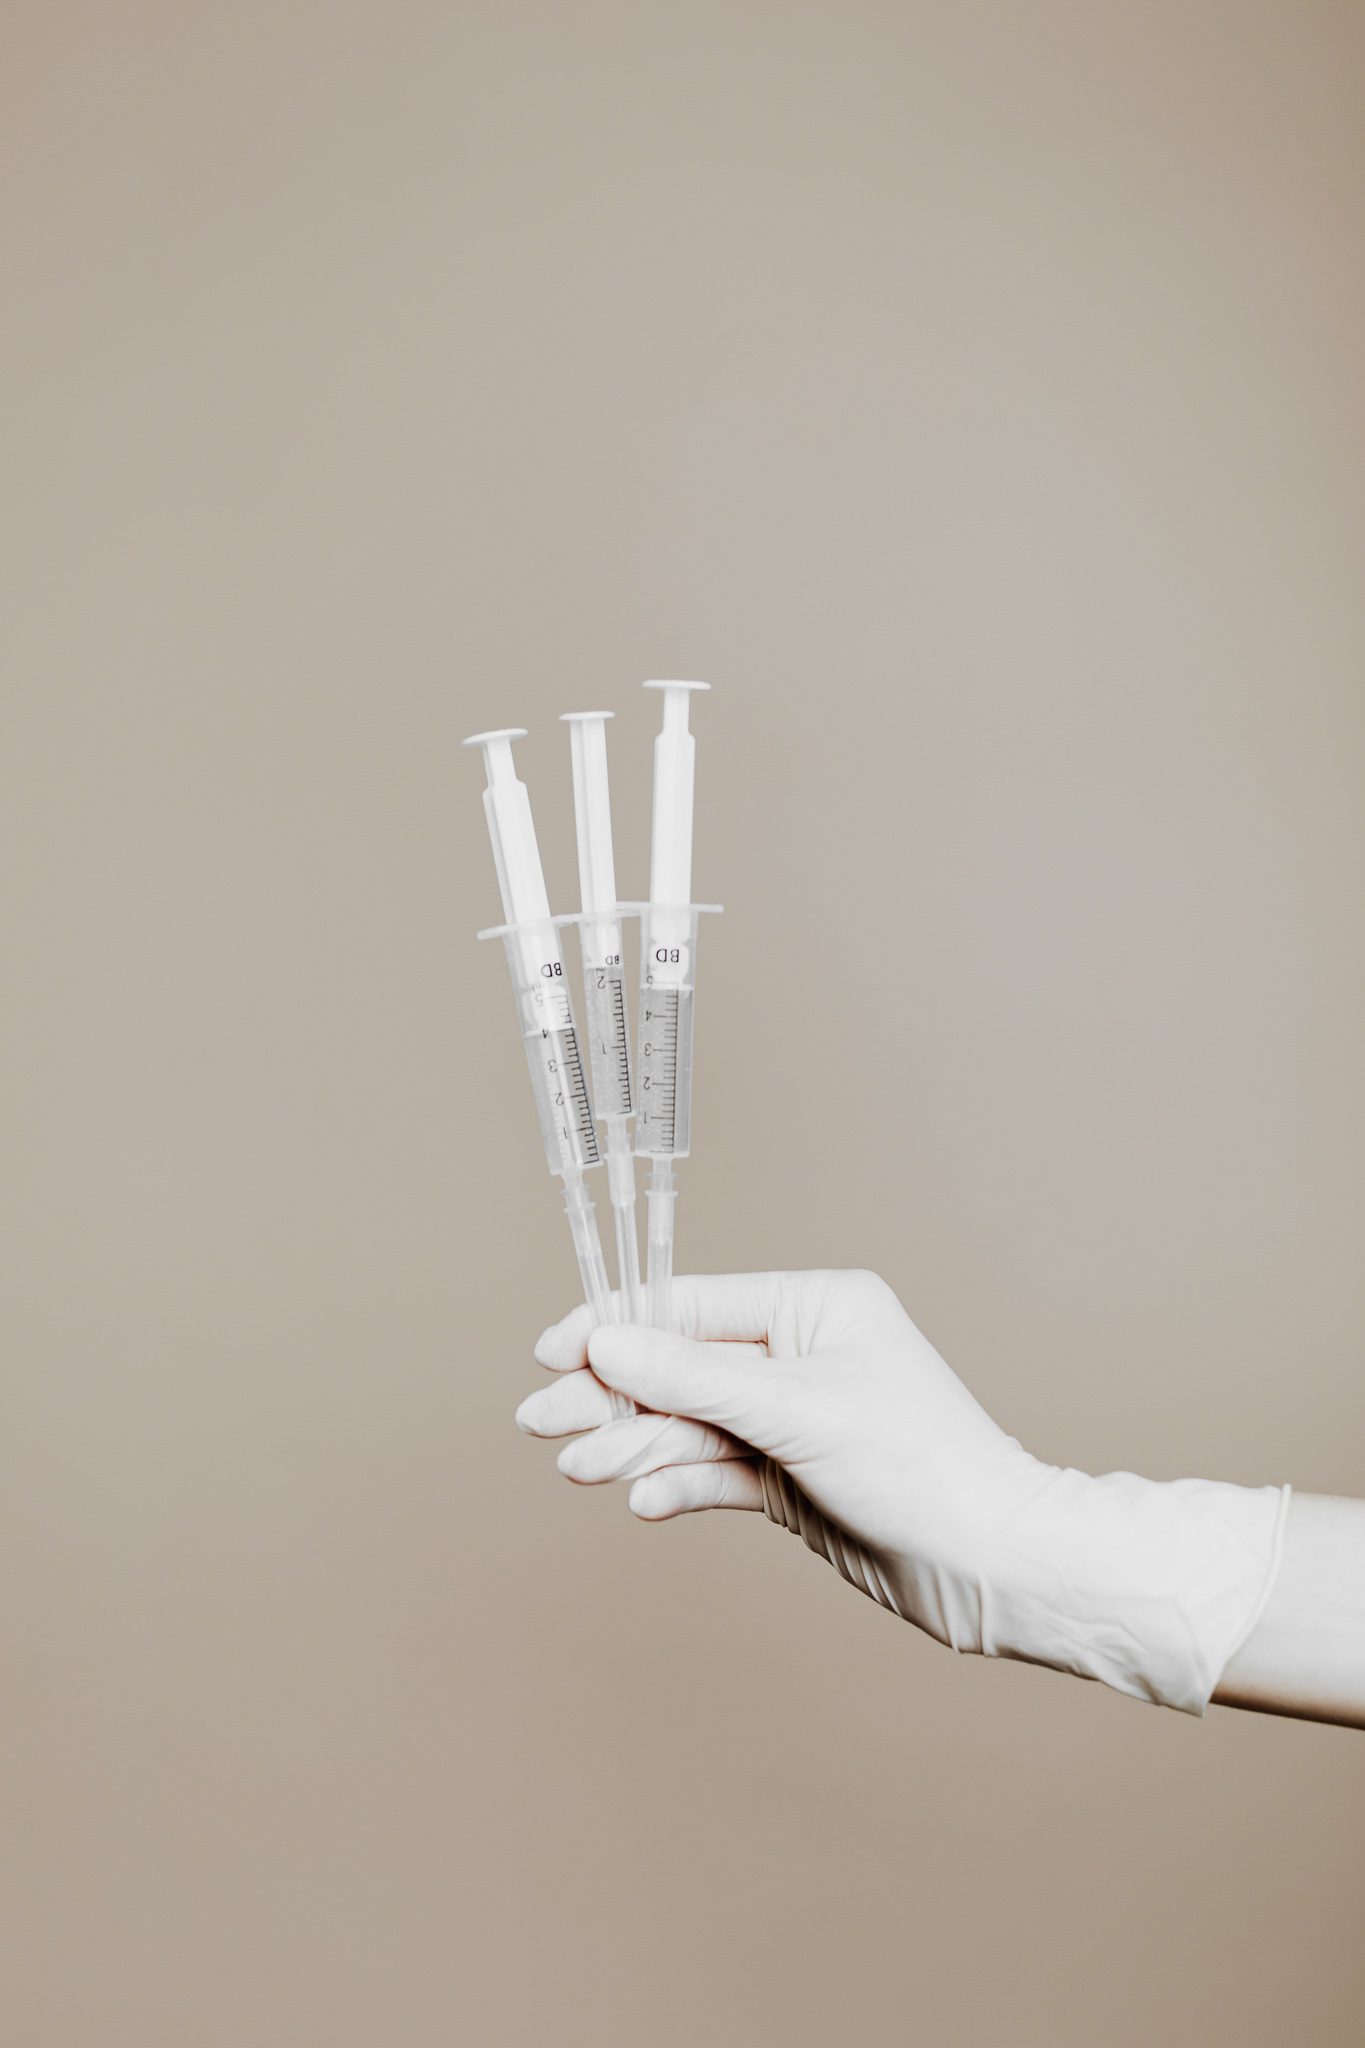 Image of hand holding needles